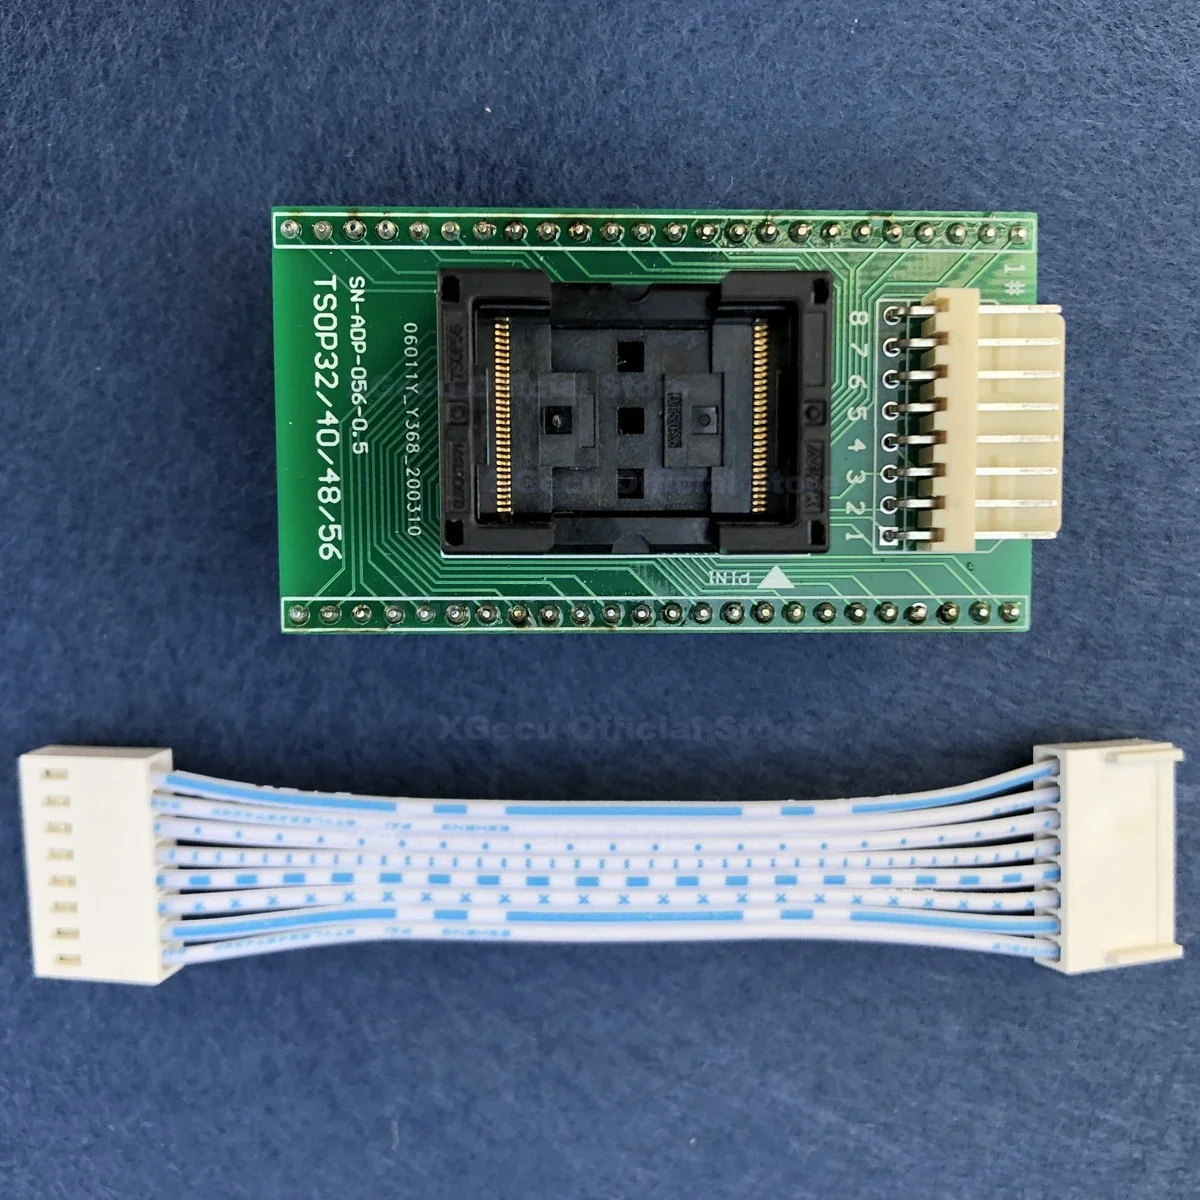 V12.66 XGecu T56 programator 56-pinowy sterownik obsługuje 37300 + ICs dla PIC/NAND Flash/EMMC TSOP48/TSOP56/BGA + 9 adapterów + soic8 klip